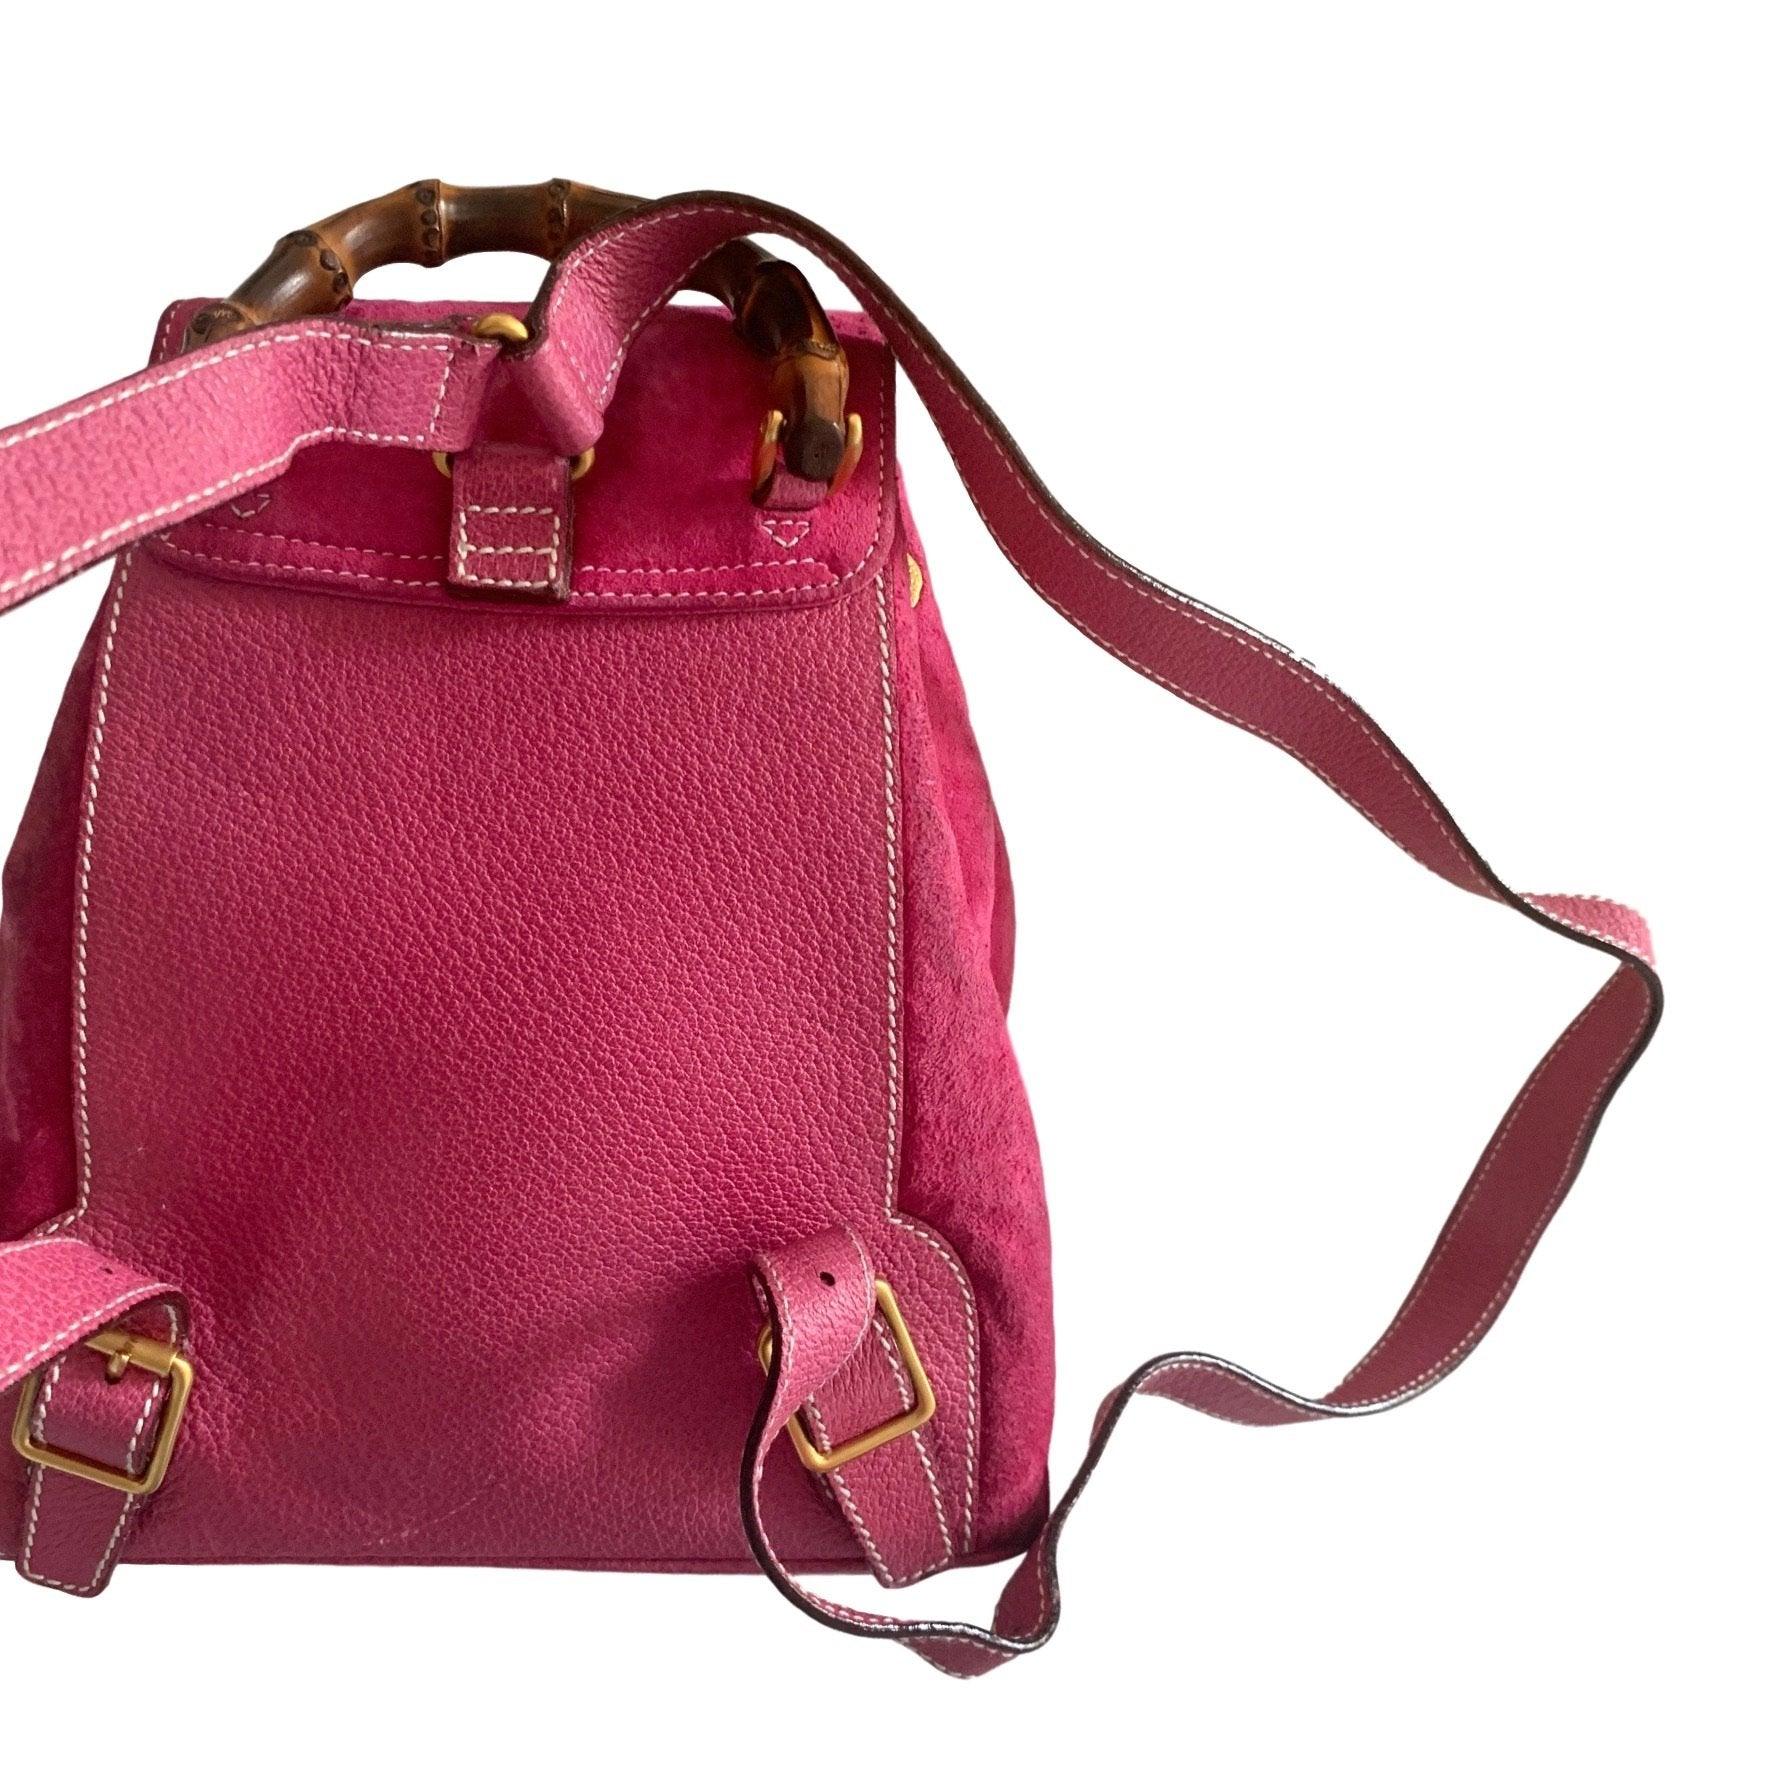 Gucci Pink Suede Bamboo Mini Backpack - Handbags